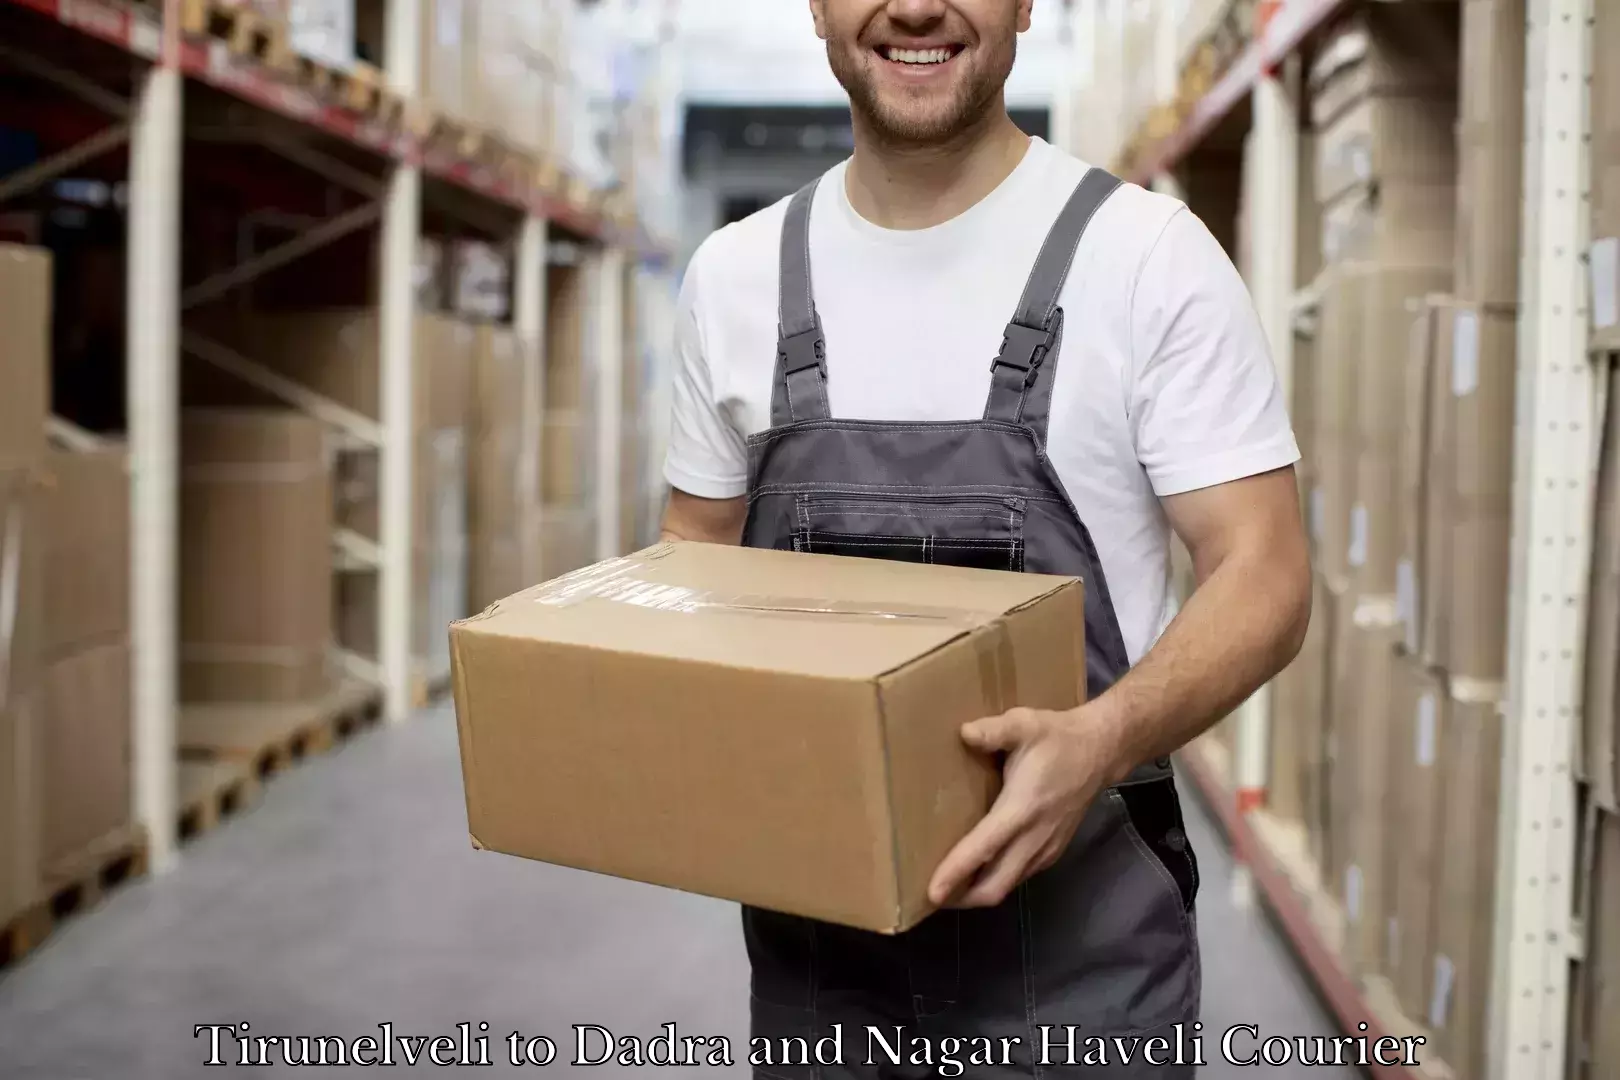 Luggage shipment specialists Tirunelveli to Dadra and Nagar Haveli